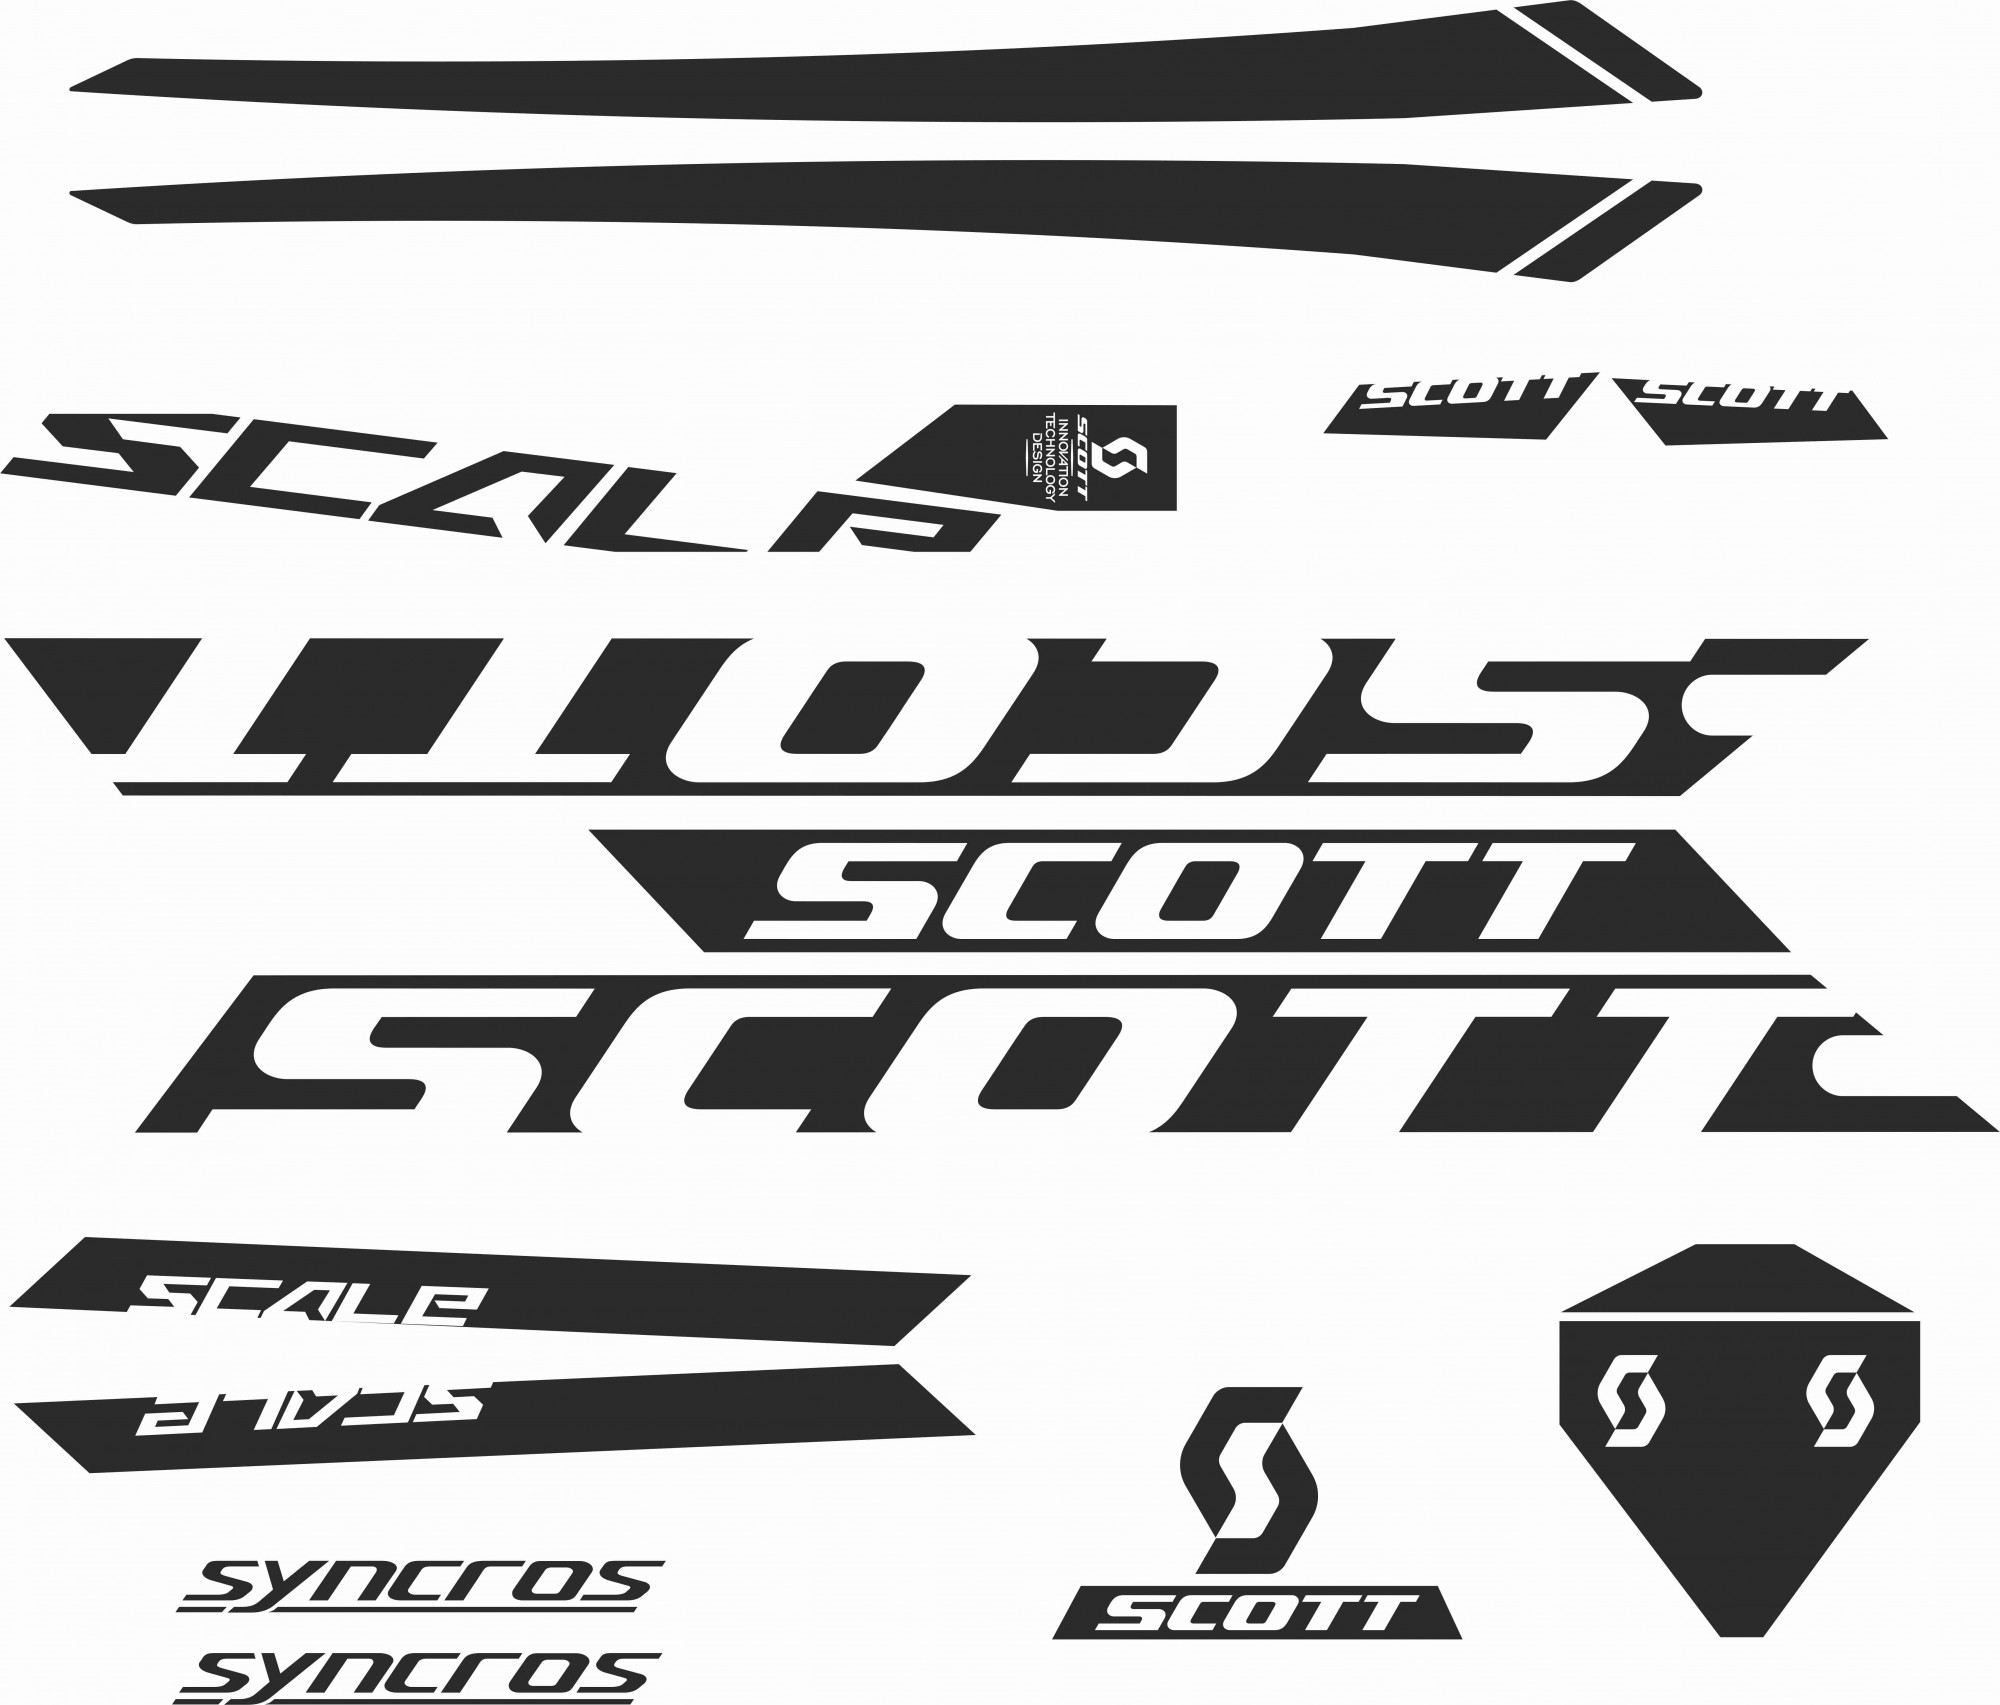 Decal Set. Scott Scale 950 Bike Sticker